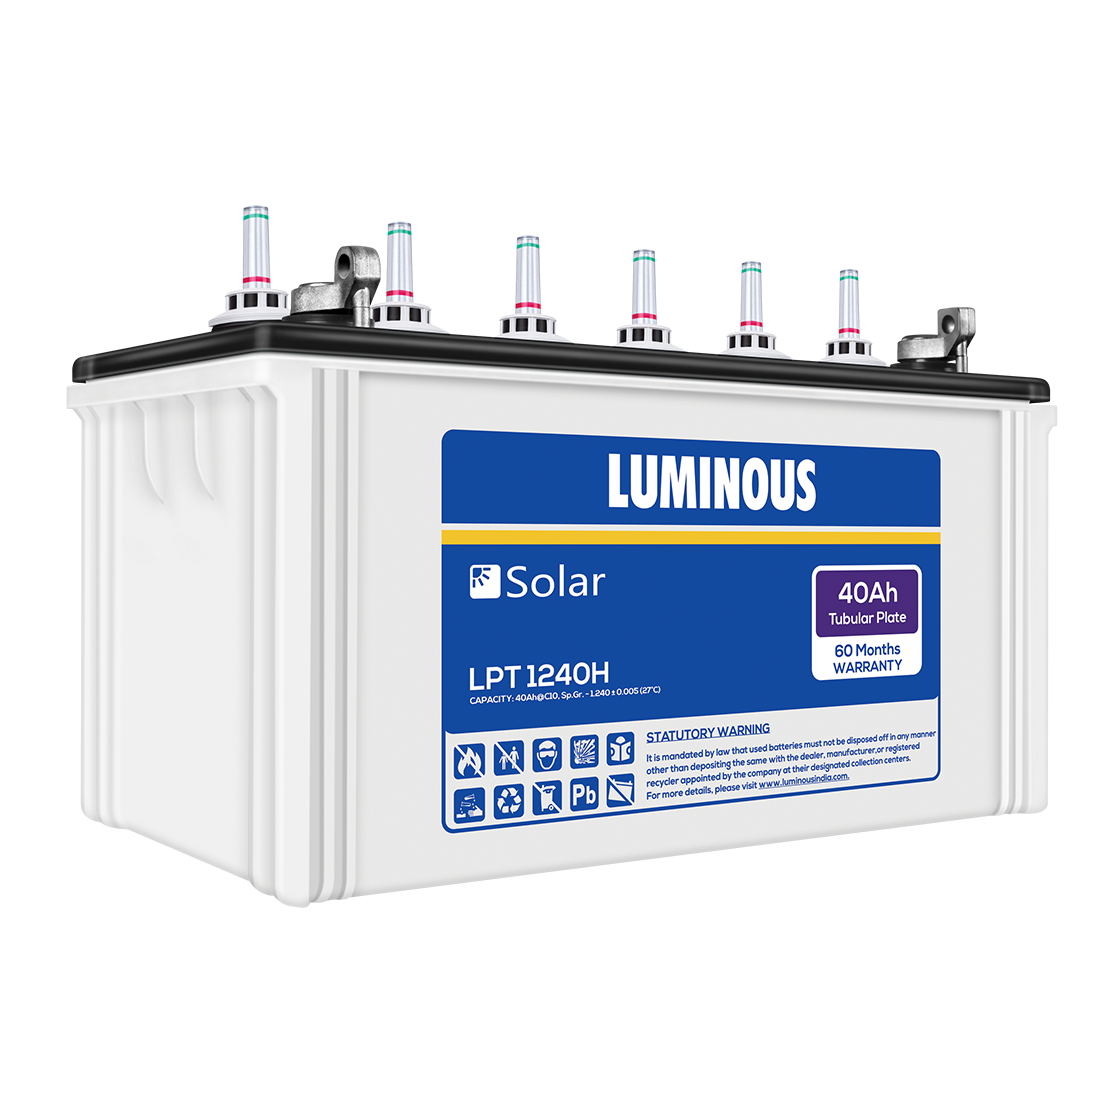 Luminous Solar Tubular Battery 40AH - LPT 1240H- Warranty: 60 Months